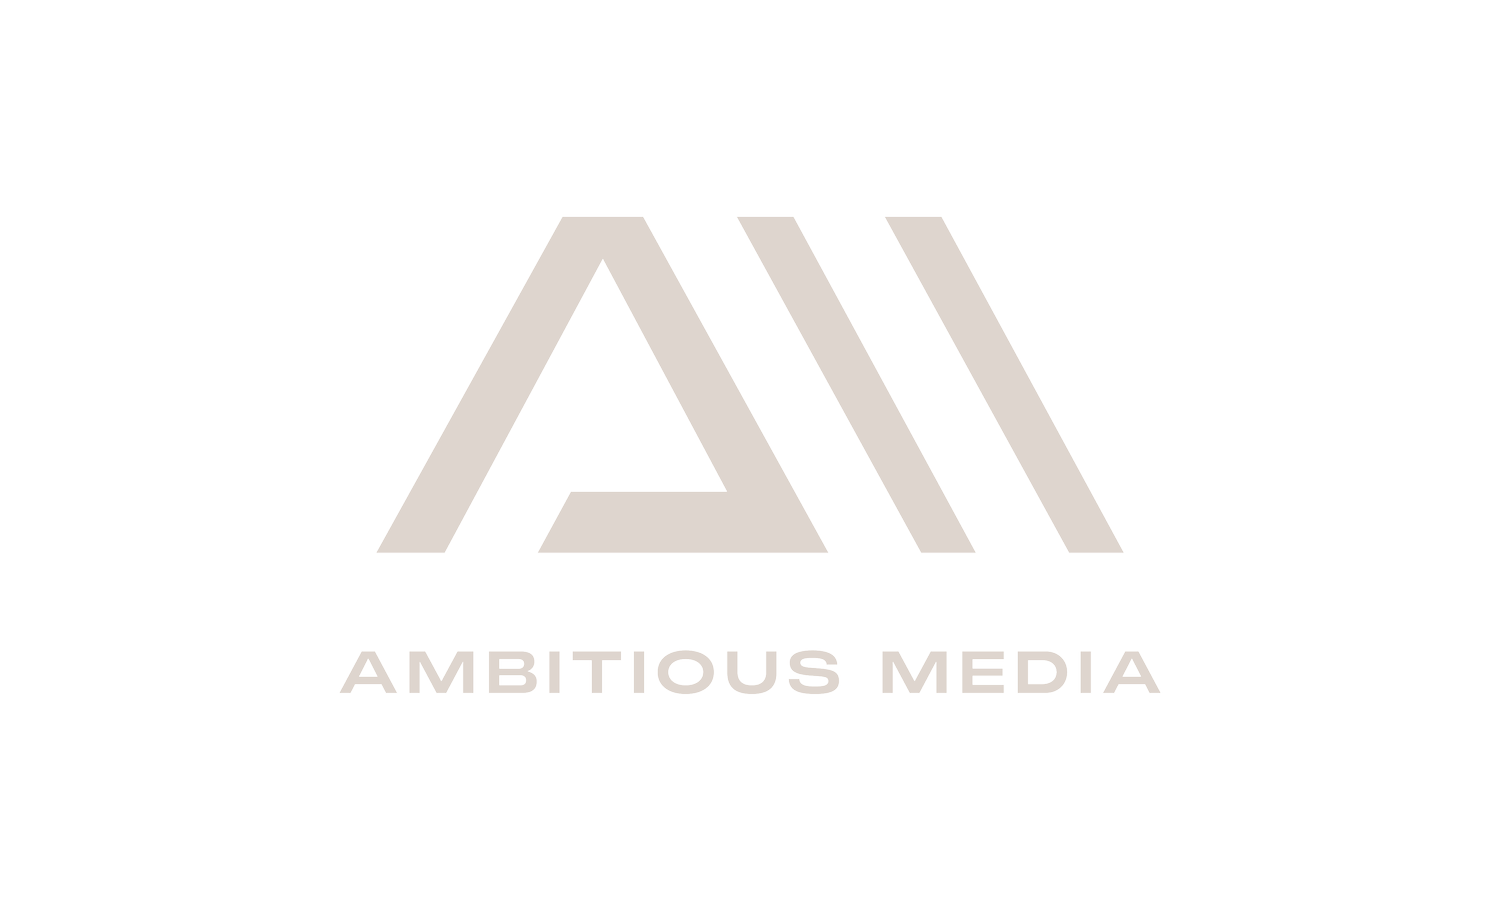 Ambitious Media